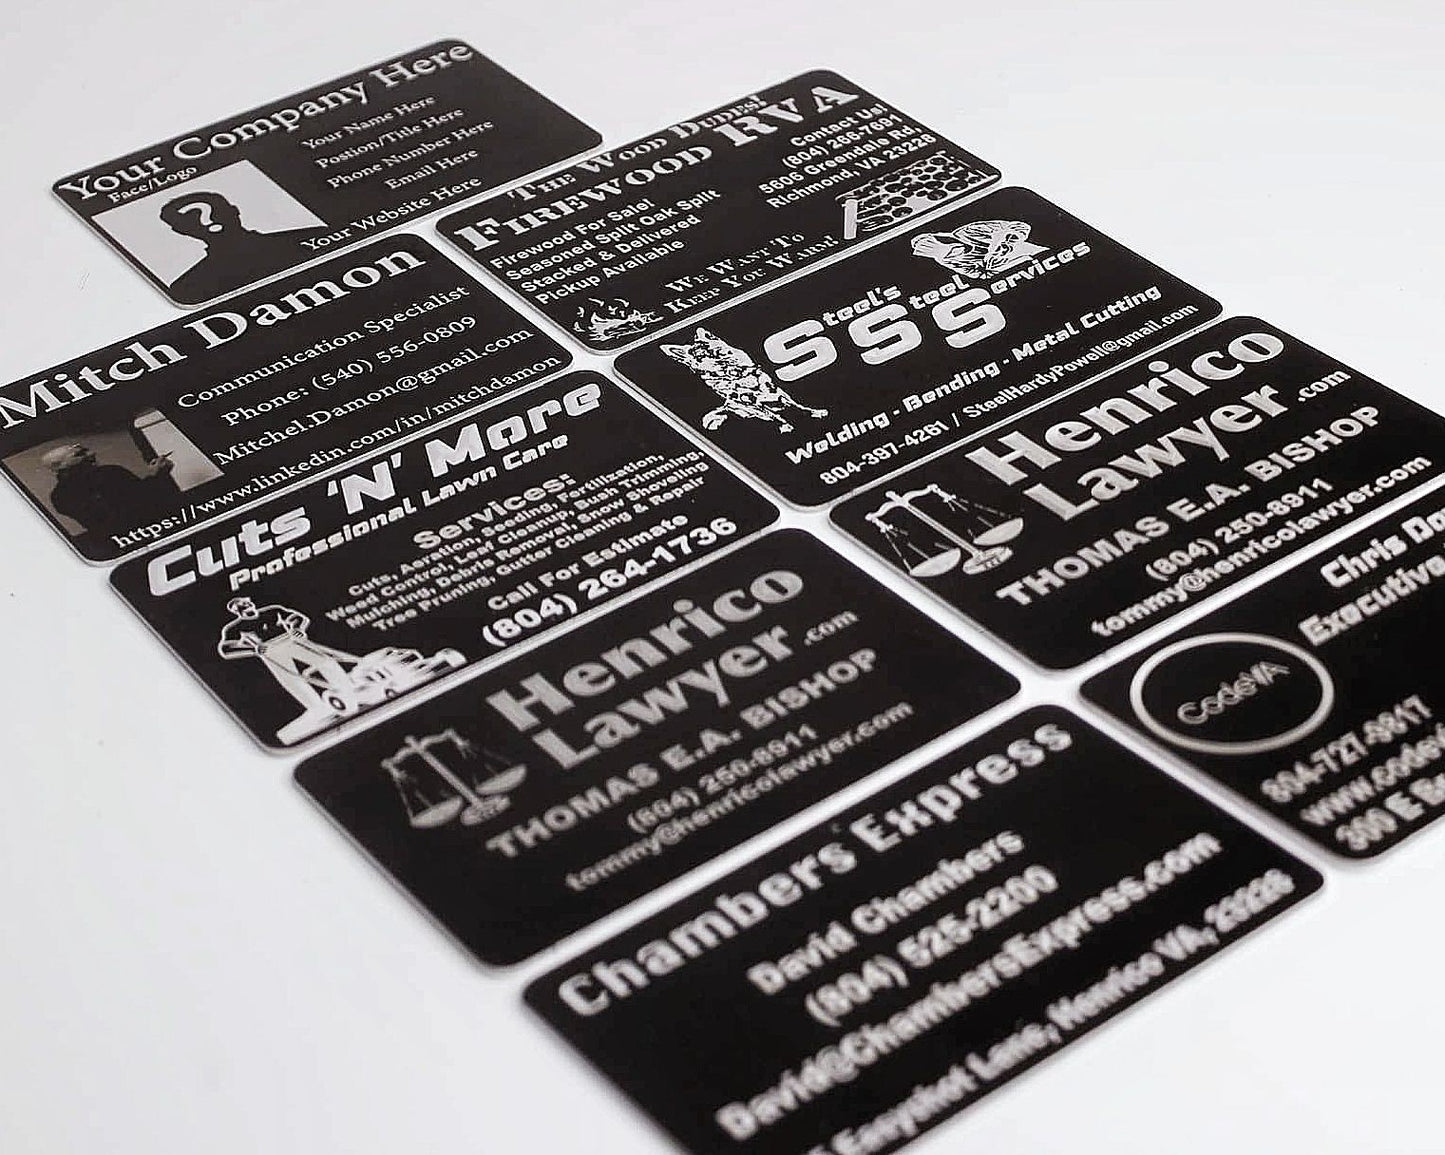 Laser Etched Black Anodized Aluminum Business Cards 100 Pack - BULK DISCOUNT SAVE $71